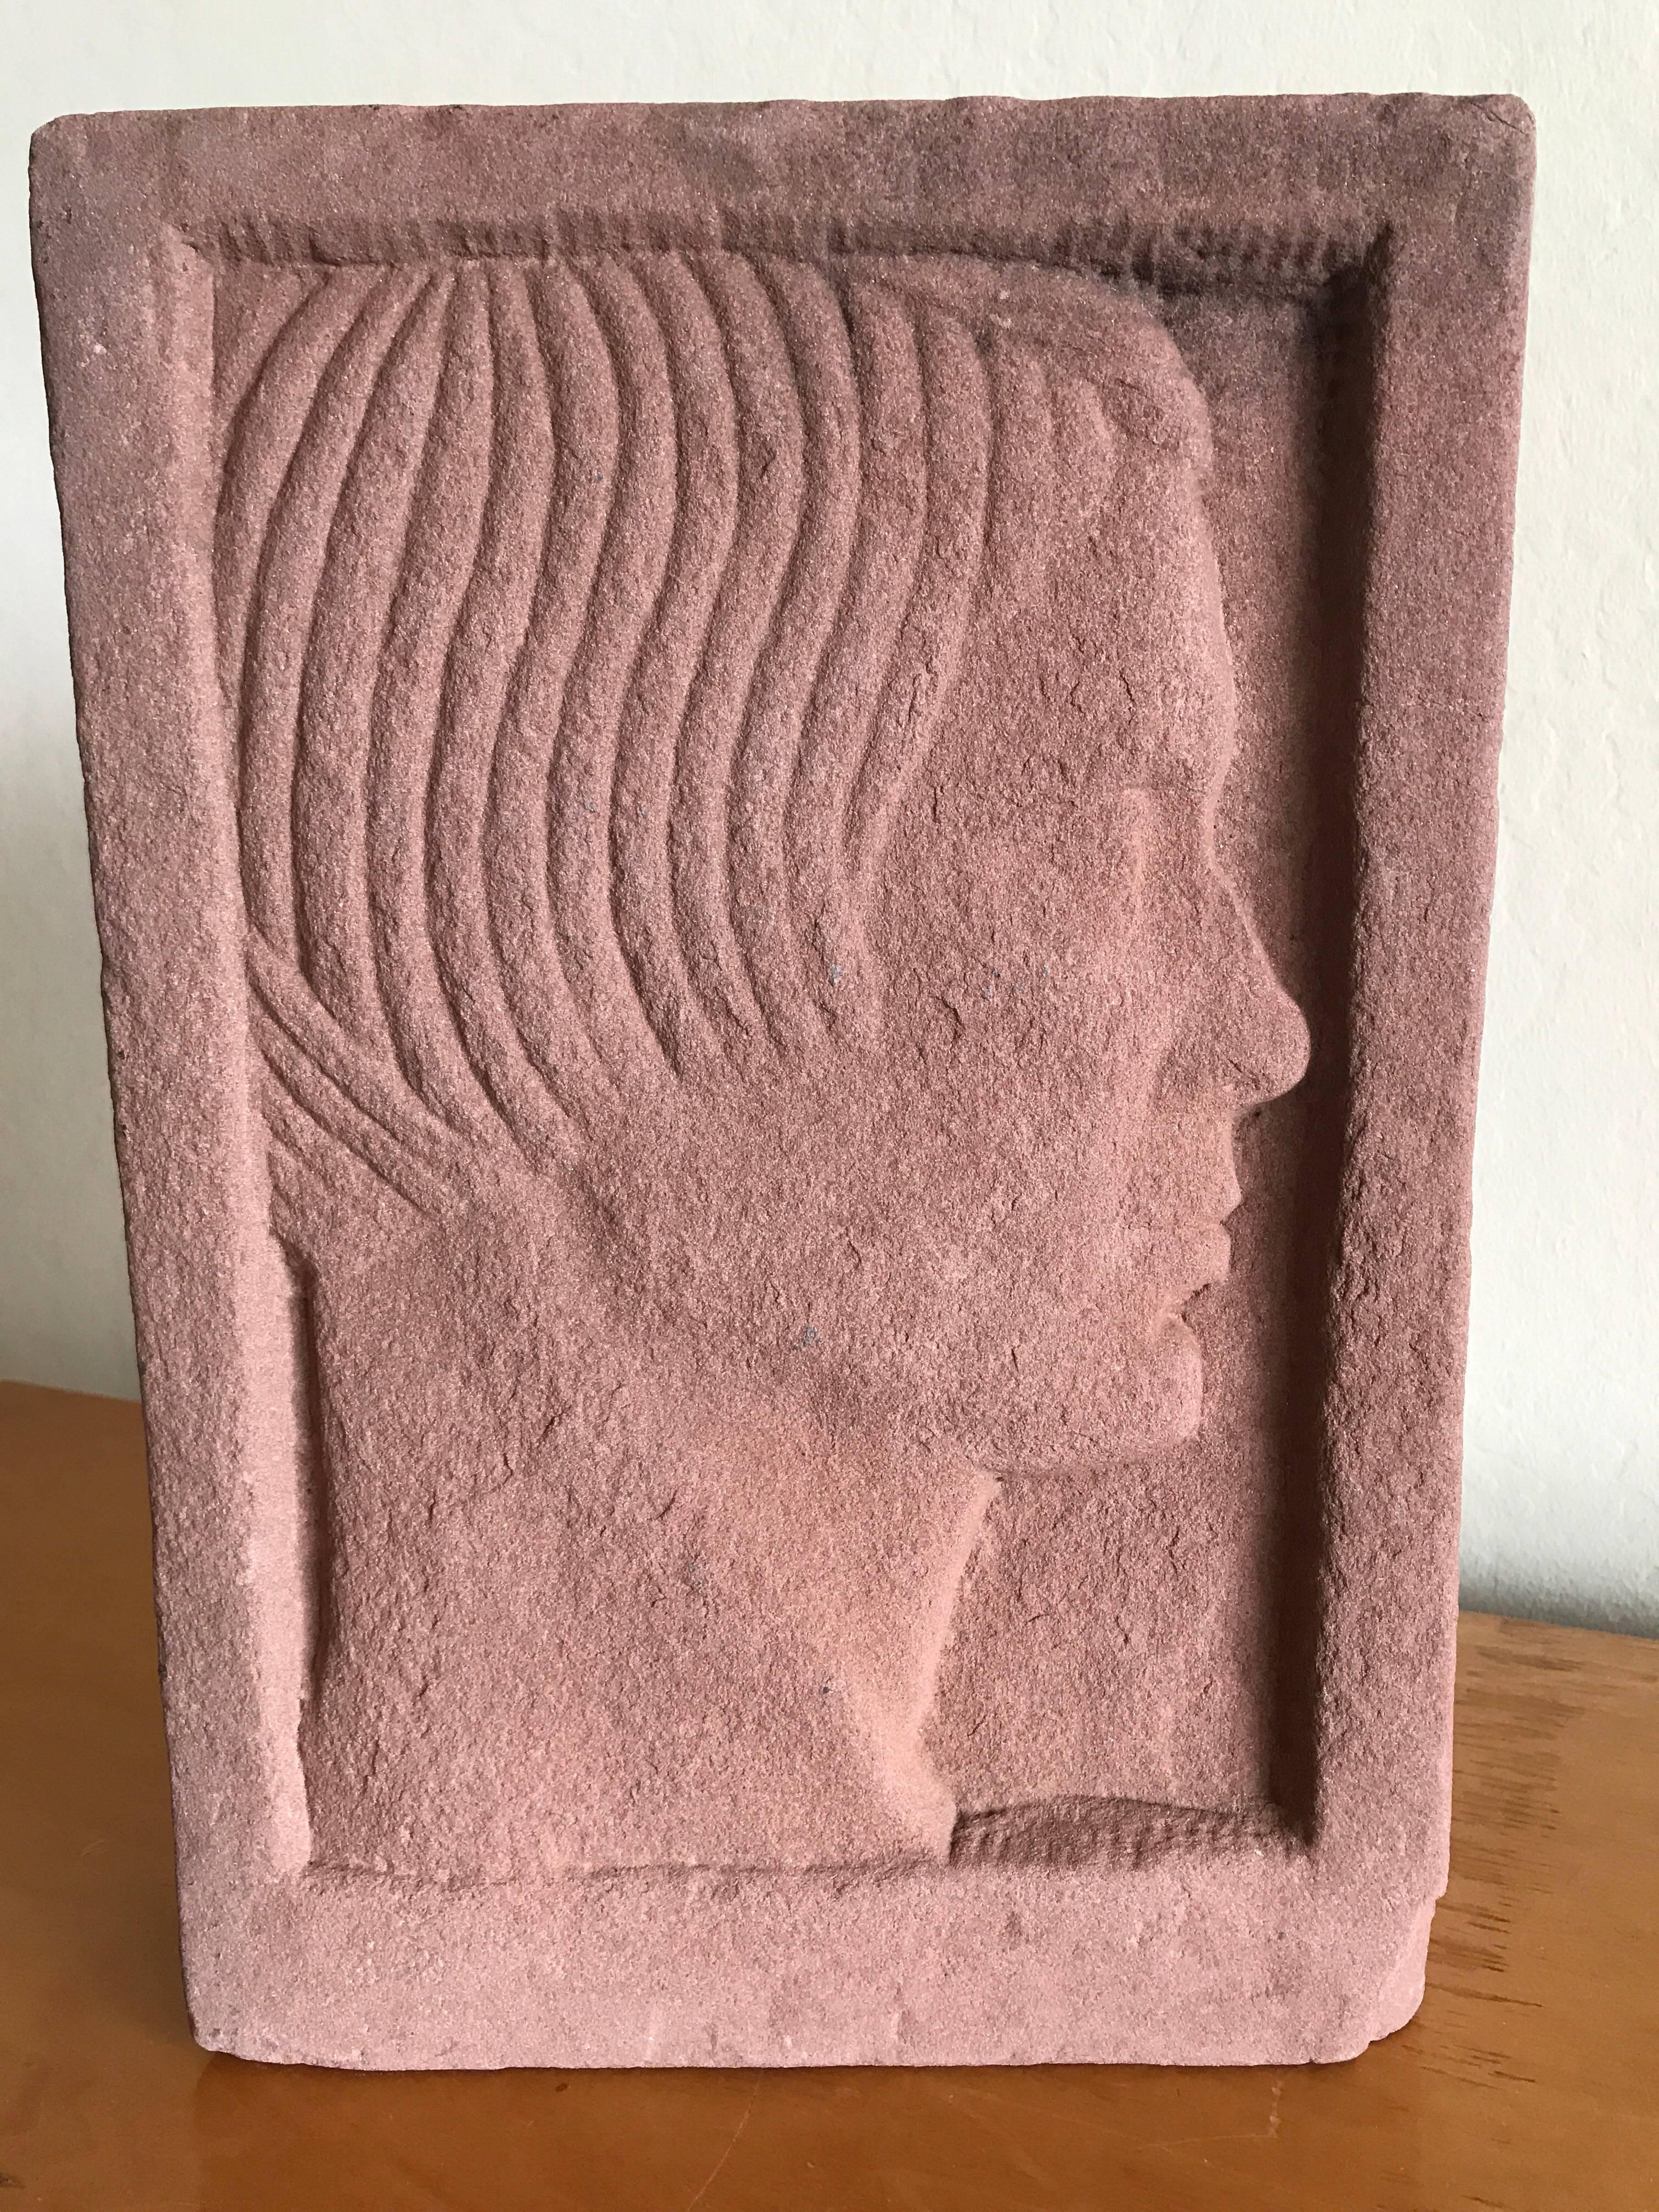 American Ruth Cravath Carved Sand Stone Sculpture, Portrait, 1930s, Bay Area Artist